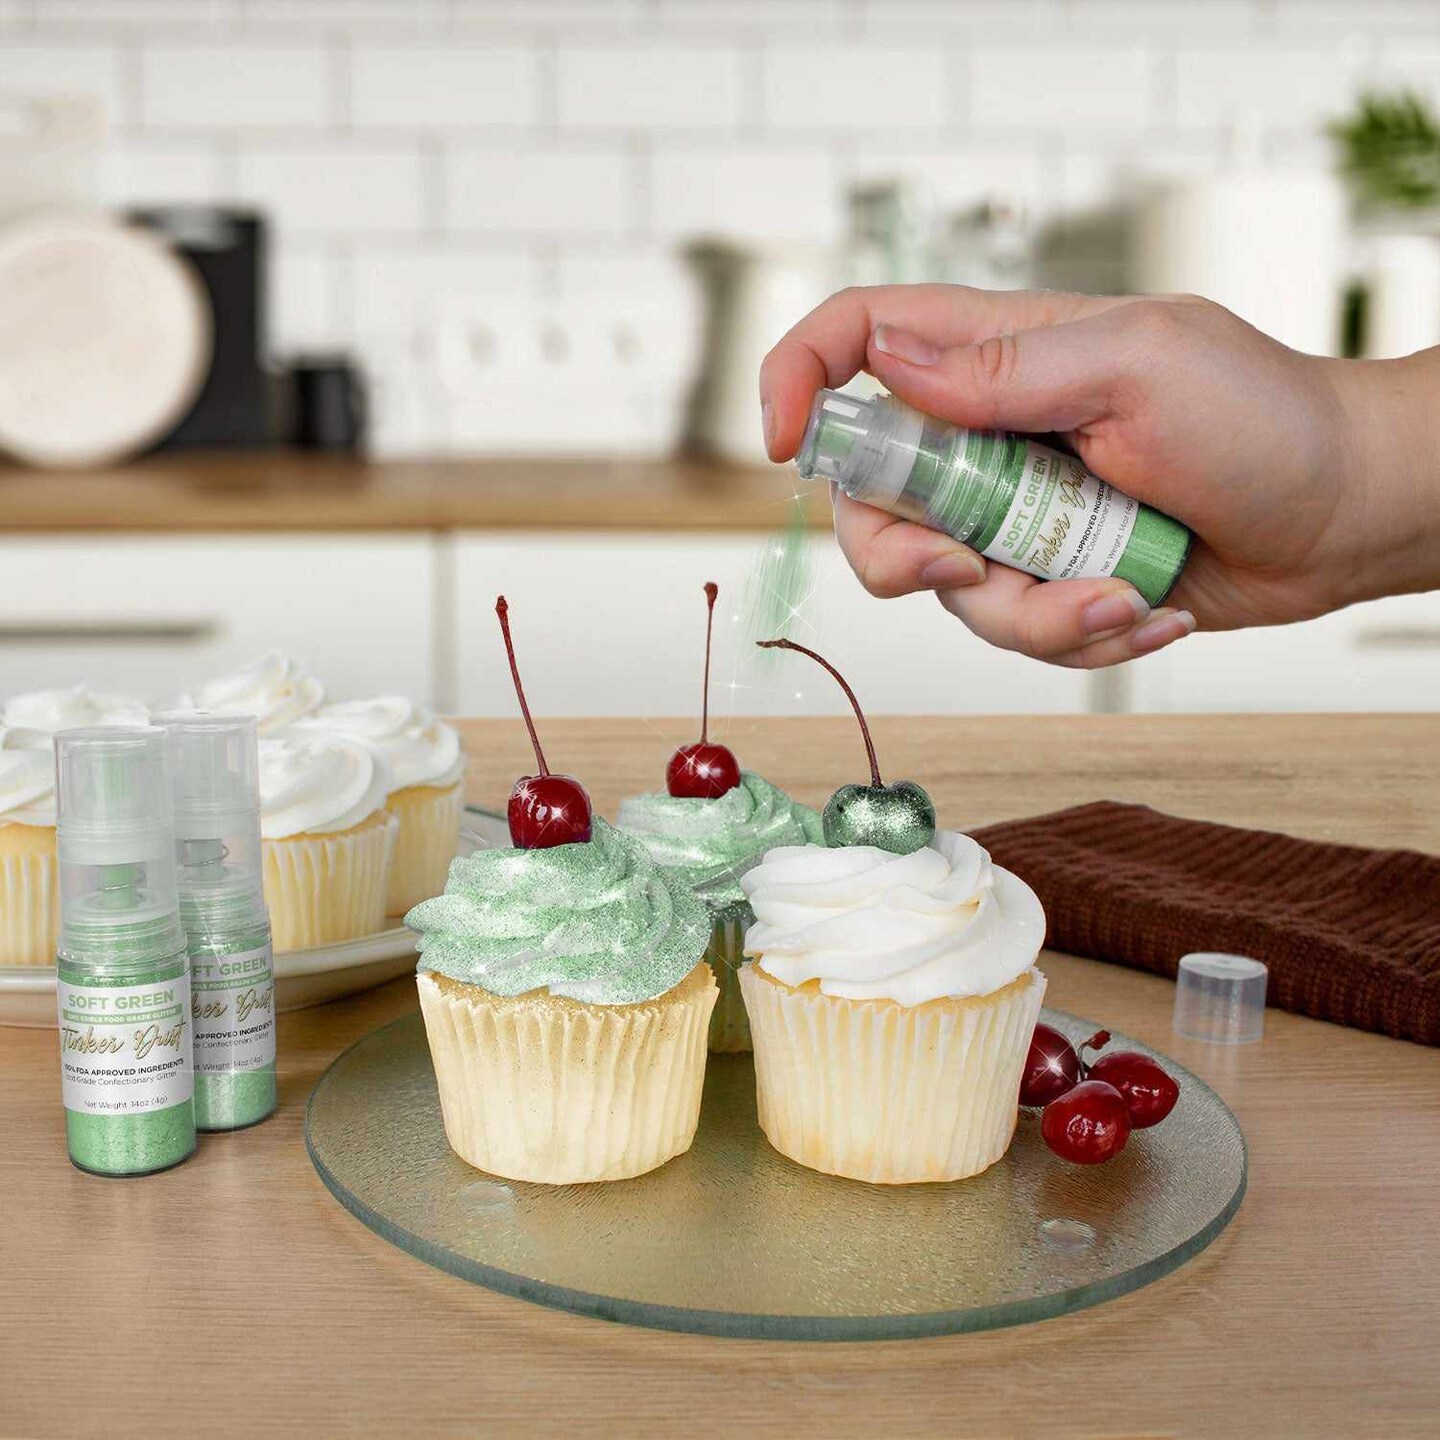 Soft Green Edible Glitter Spray - Edible Powder Dust Spray Glitter for Food, Drinks, Strawberries, Muffins, Cake Decorating. FDA Compliant (4 Gram Pump)